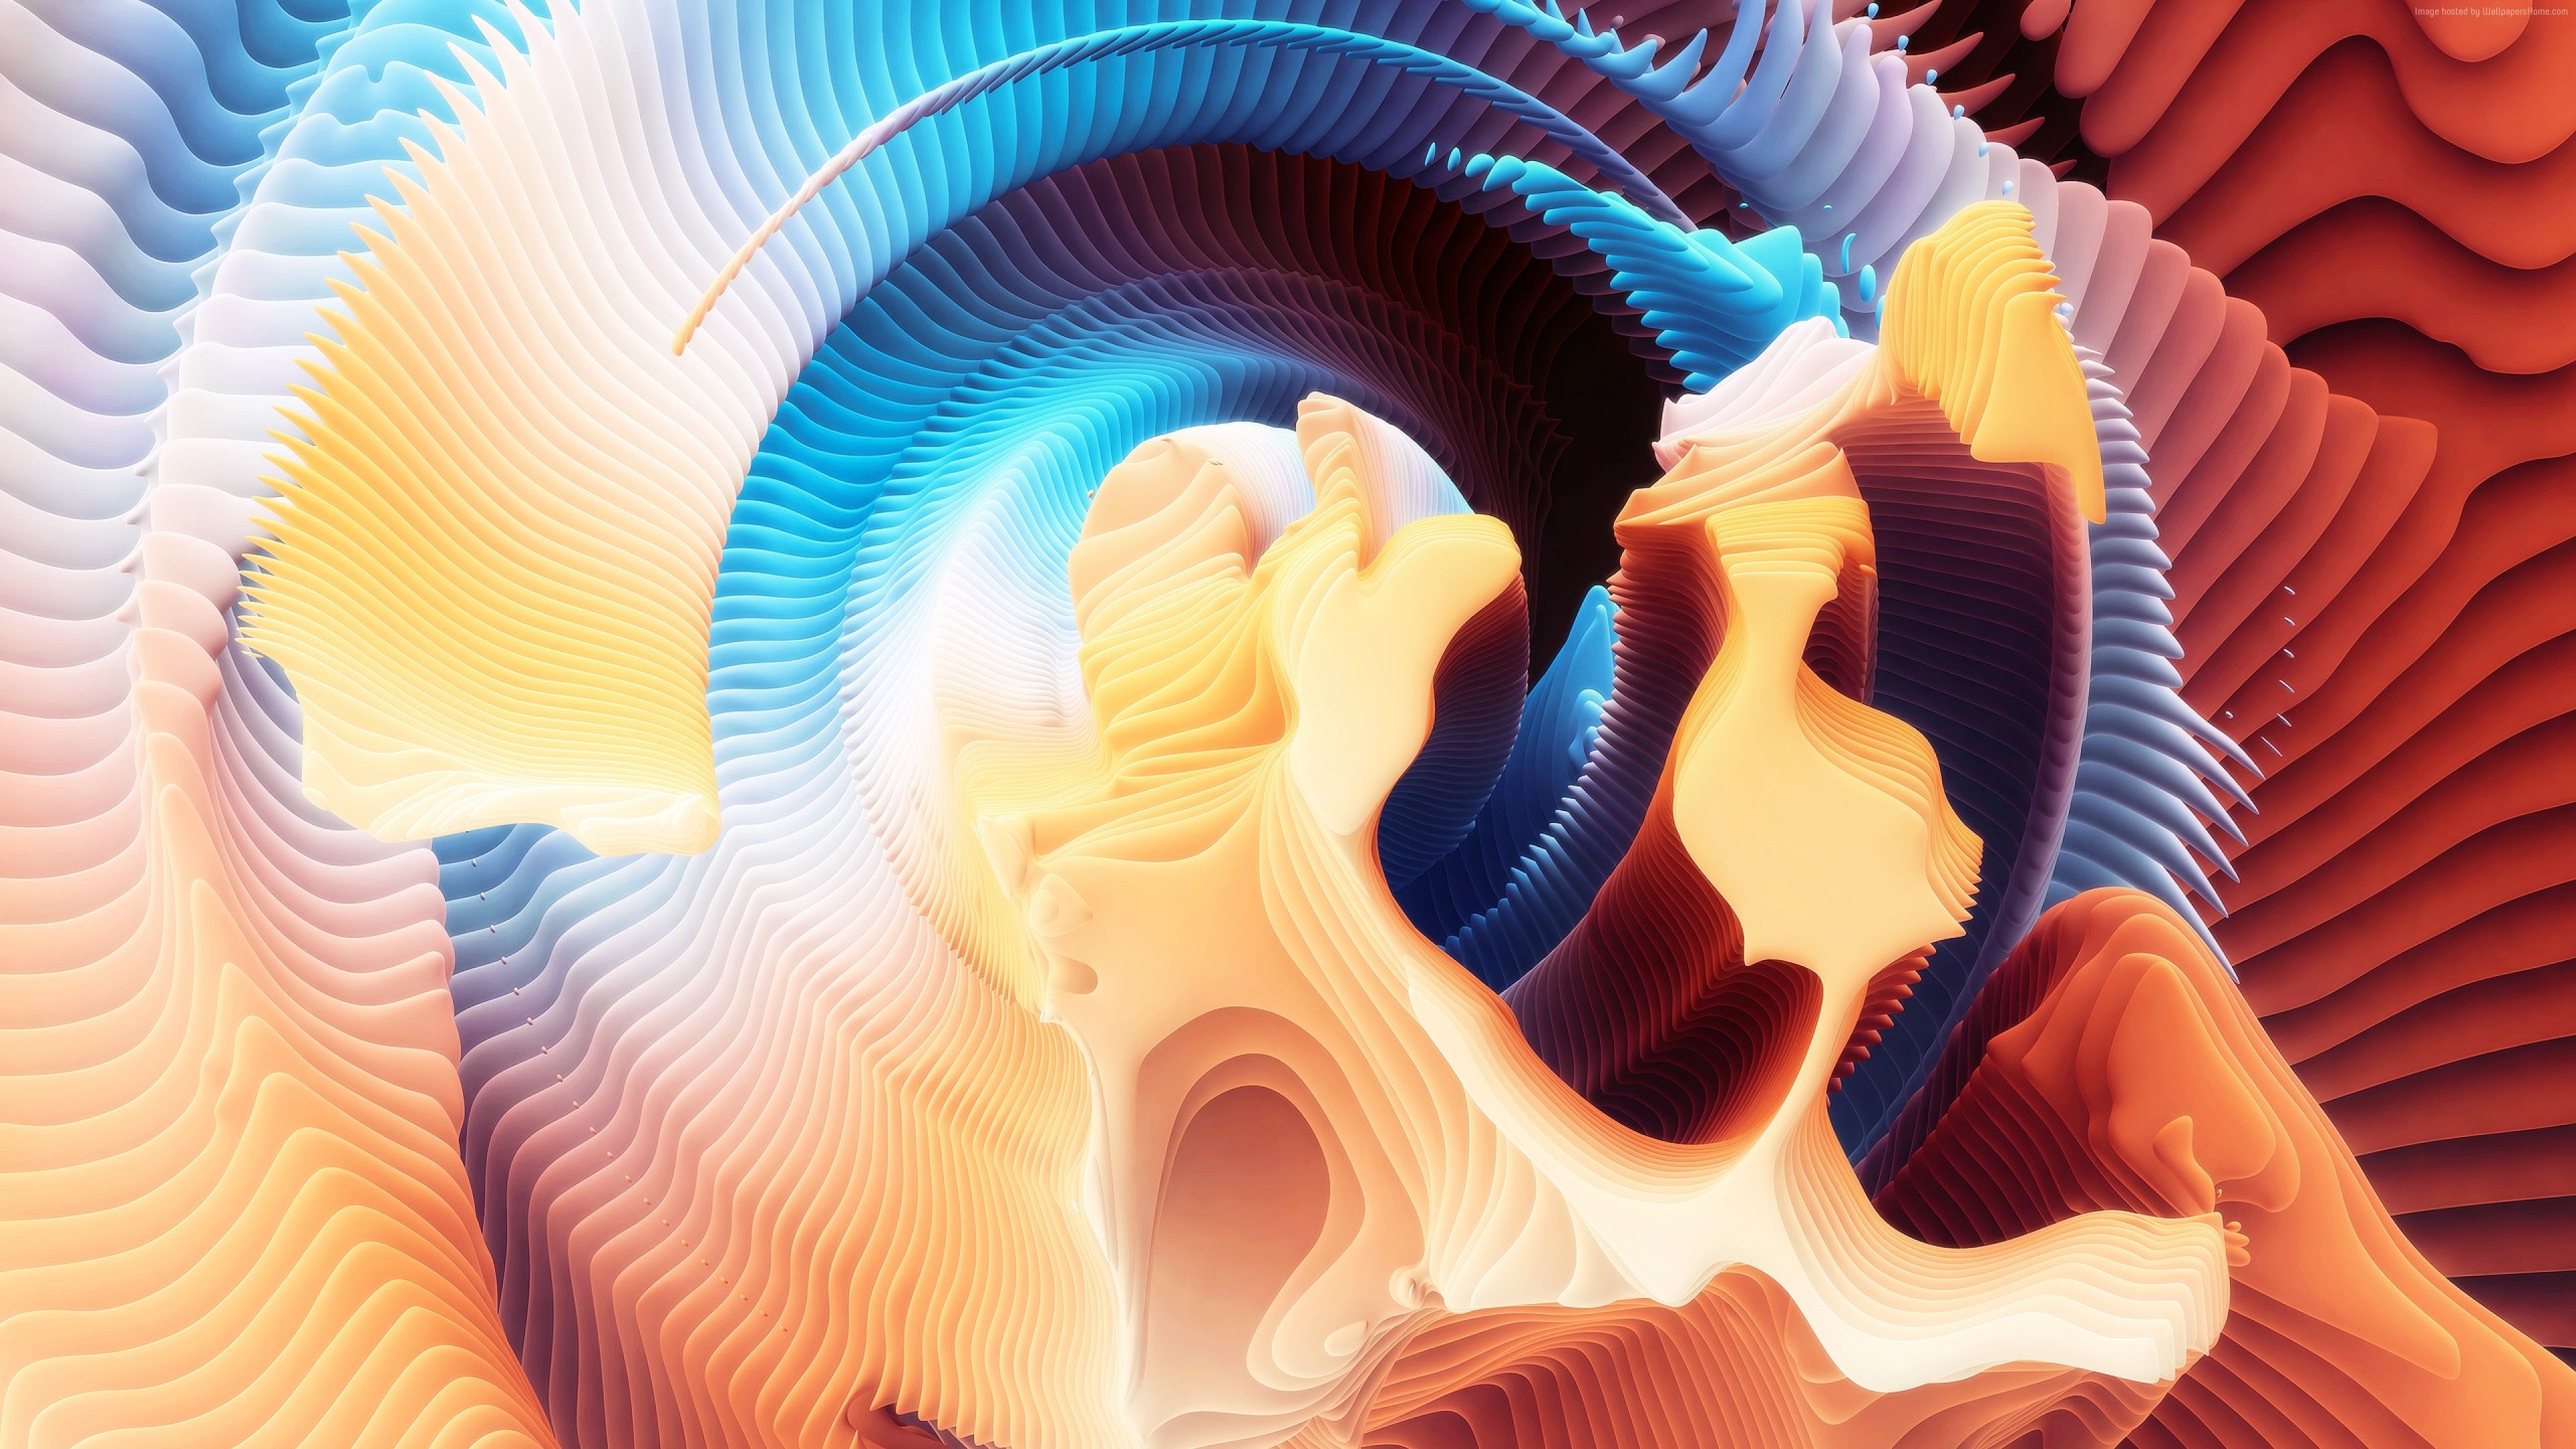 Wallpaper HD, Spirals, abstract, Abstract Wallpaper Download